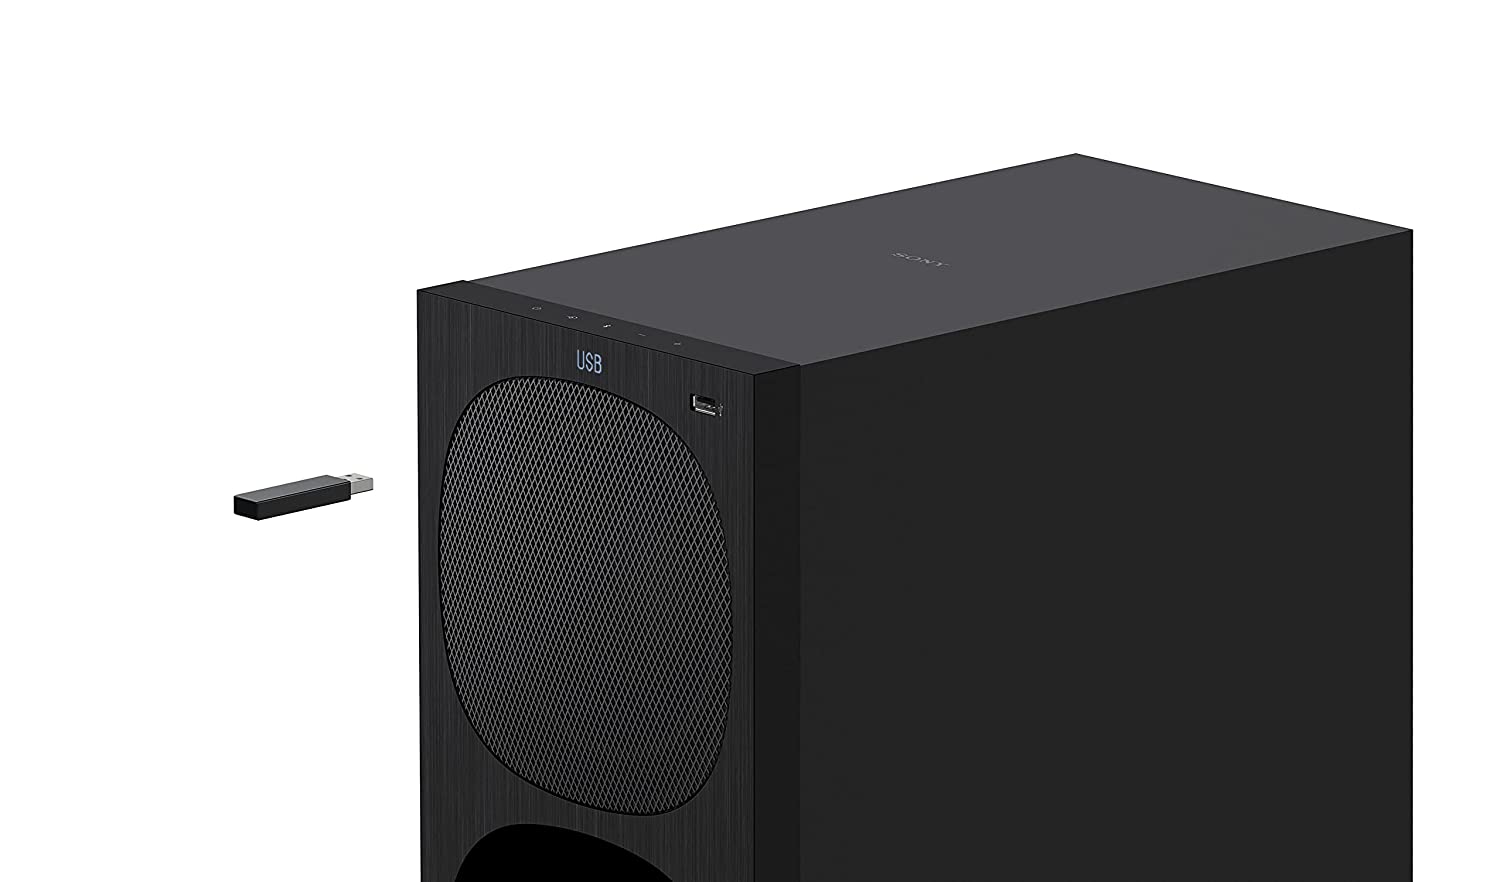 Sony 5.1ch Home Cinema with Wireless Rear Speakers | HT-S40R